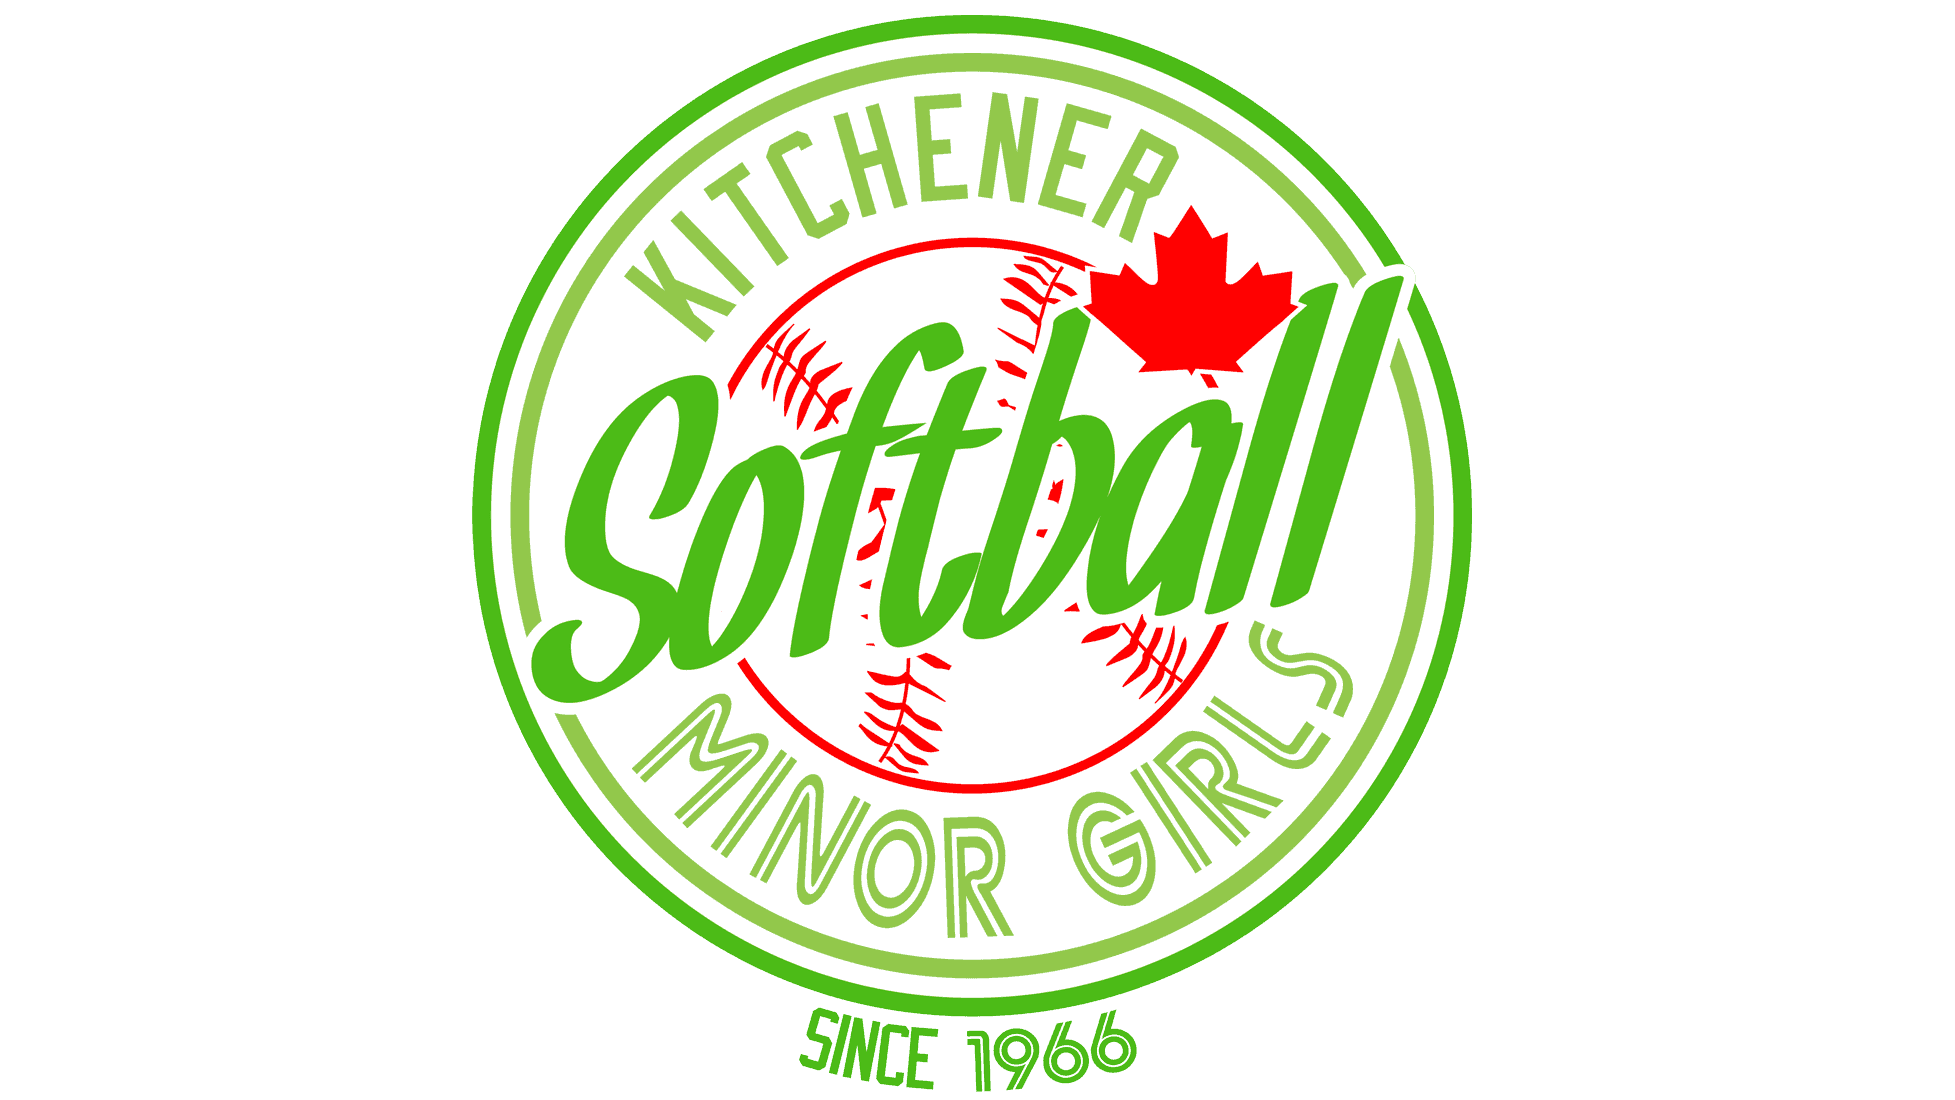 Kitchener Minor Girls Softball Association's Logo